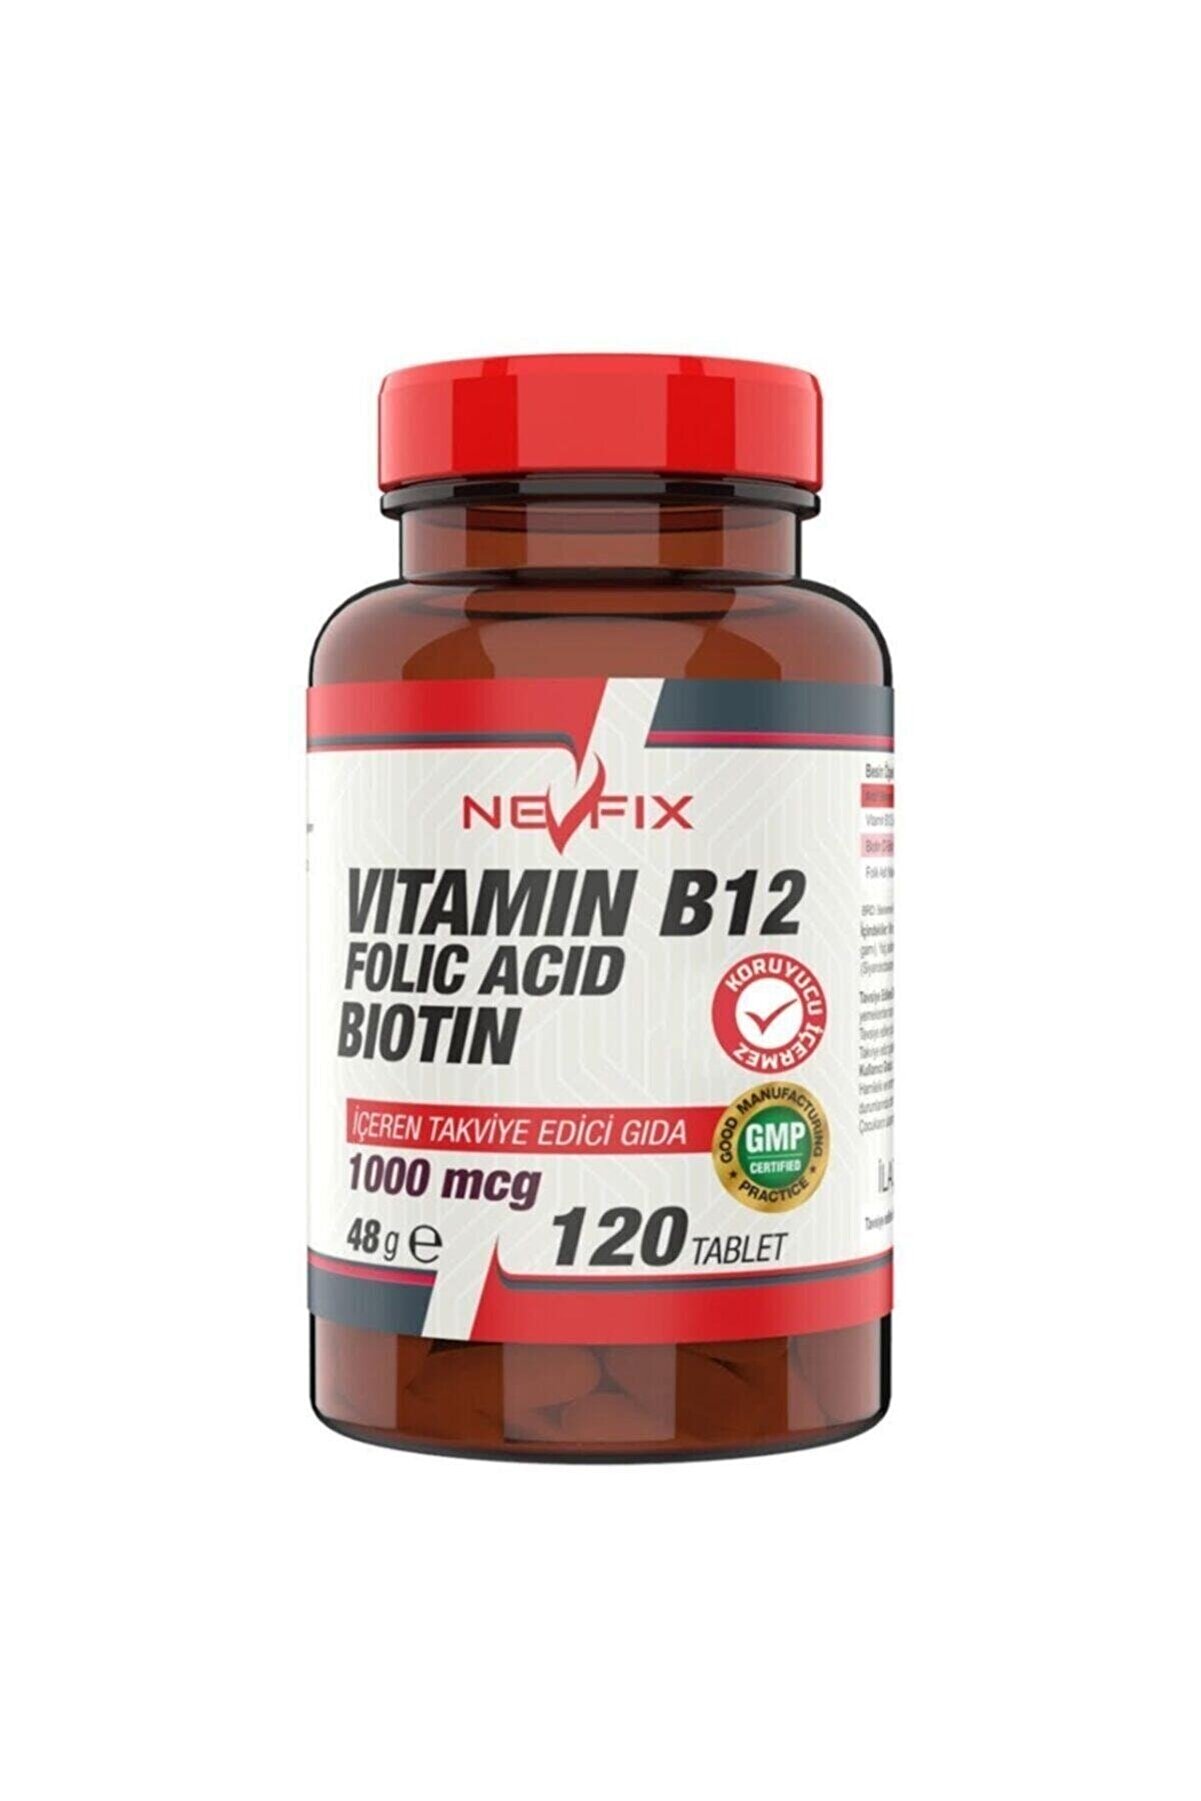 Nevfix Vitamin B12 Folic Acid Biotin 120 Tablet